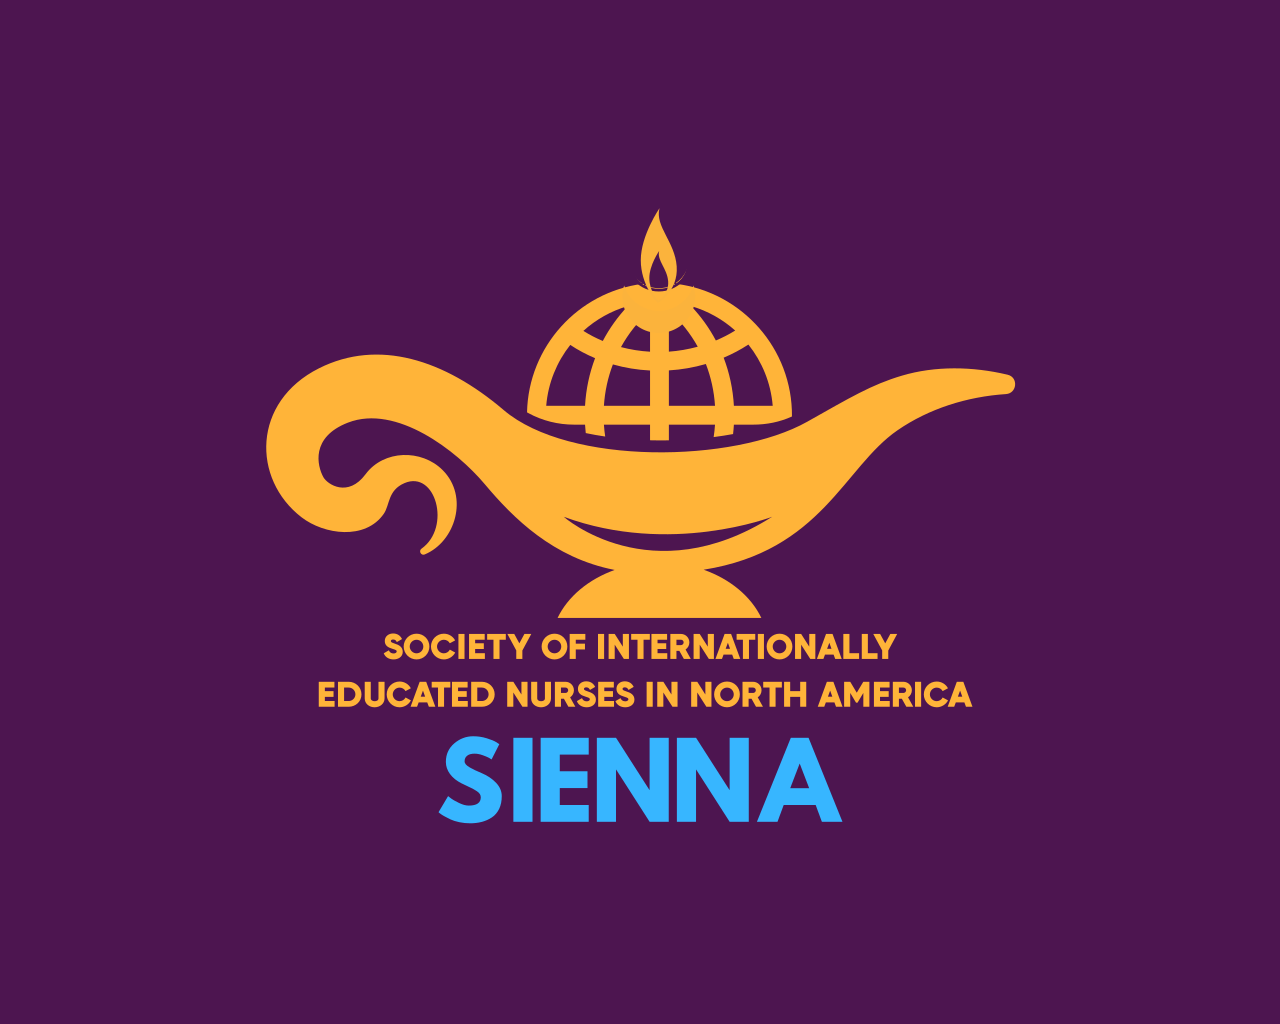 Society of Internationally Educated Nurses in North America